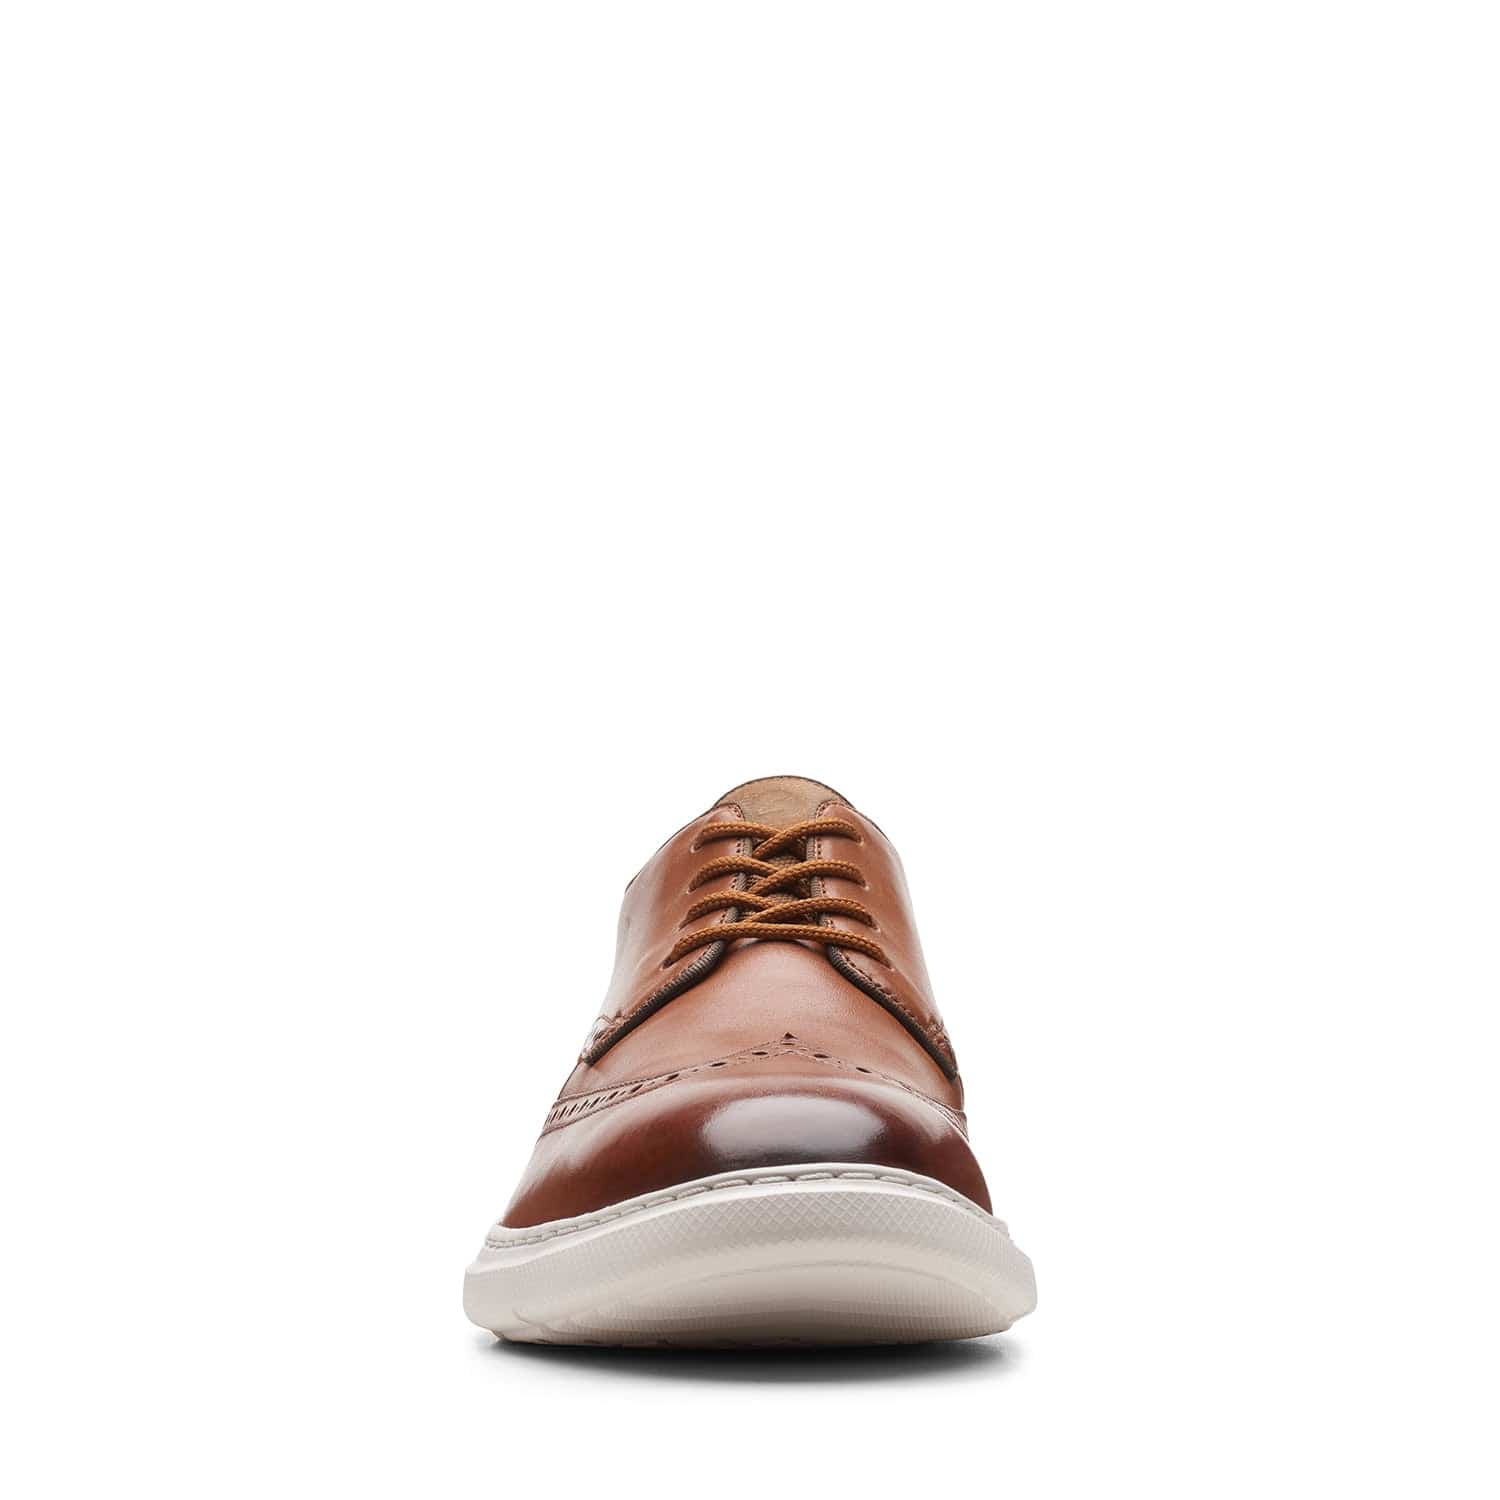 Clarks Dennet Wing Shoes - Dark Tan Leather - 261629727 - G Width (Standard Fit)